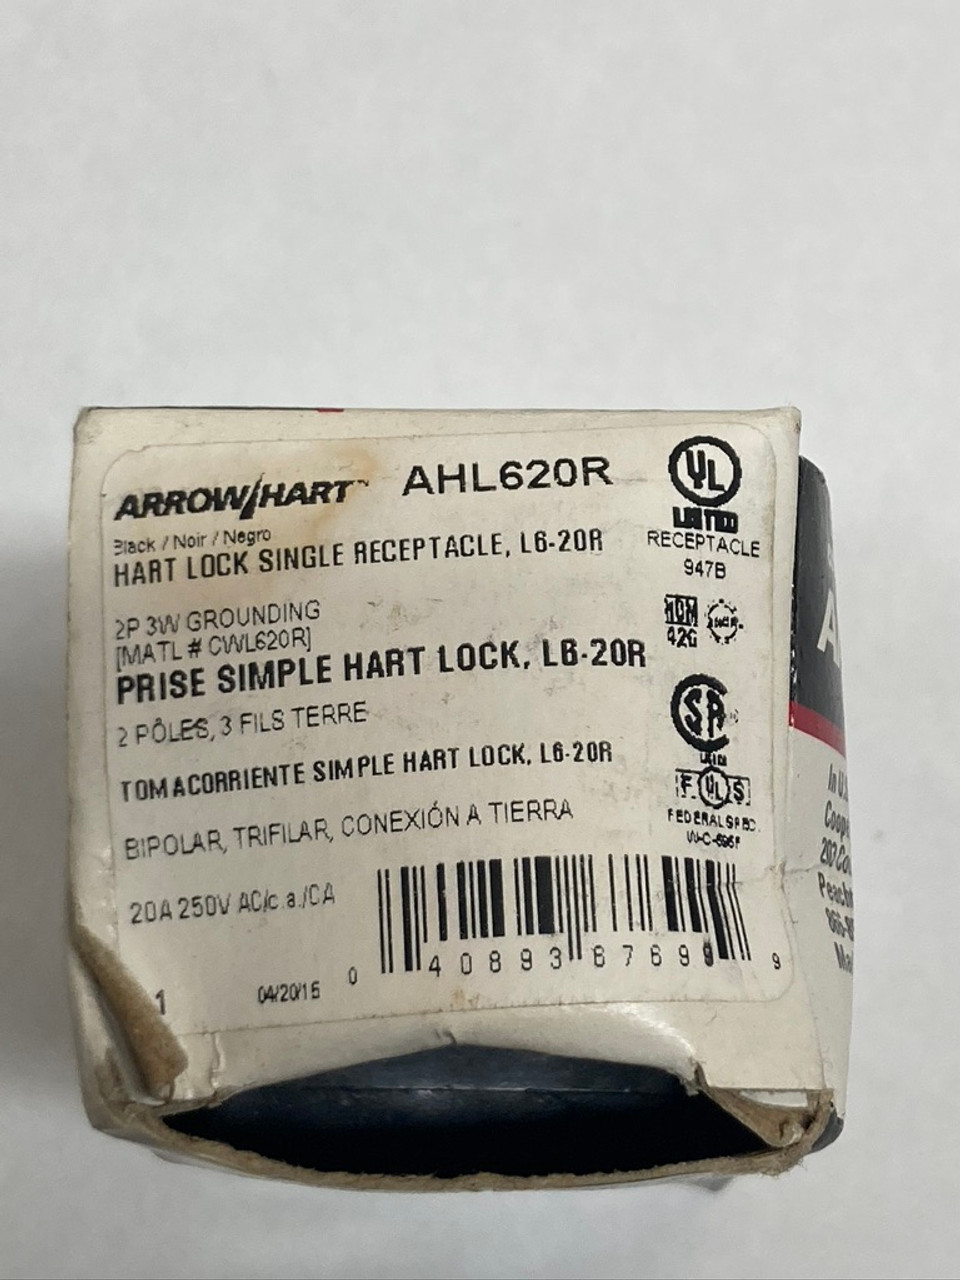 L6-20R Hart Lock Single Receptacle AHL620R Arrow Hart